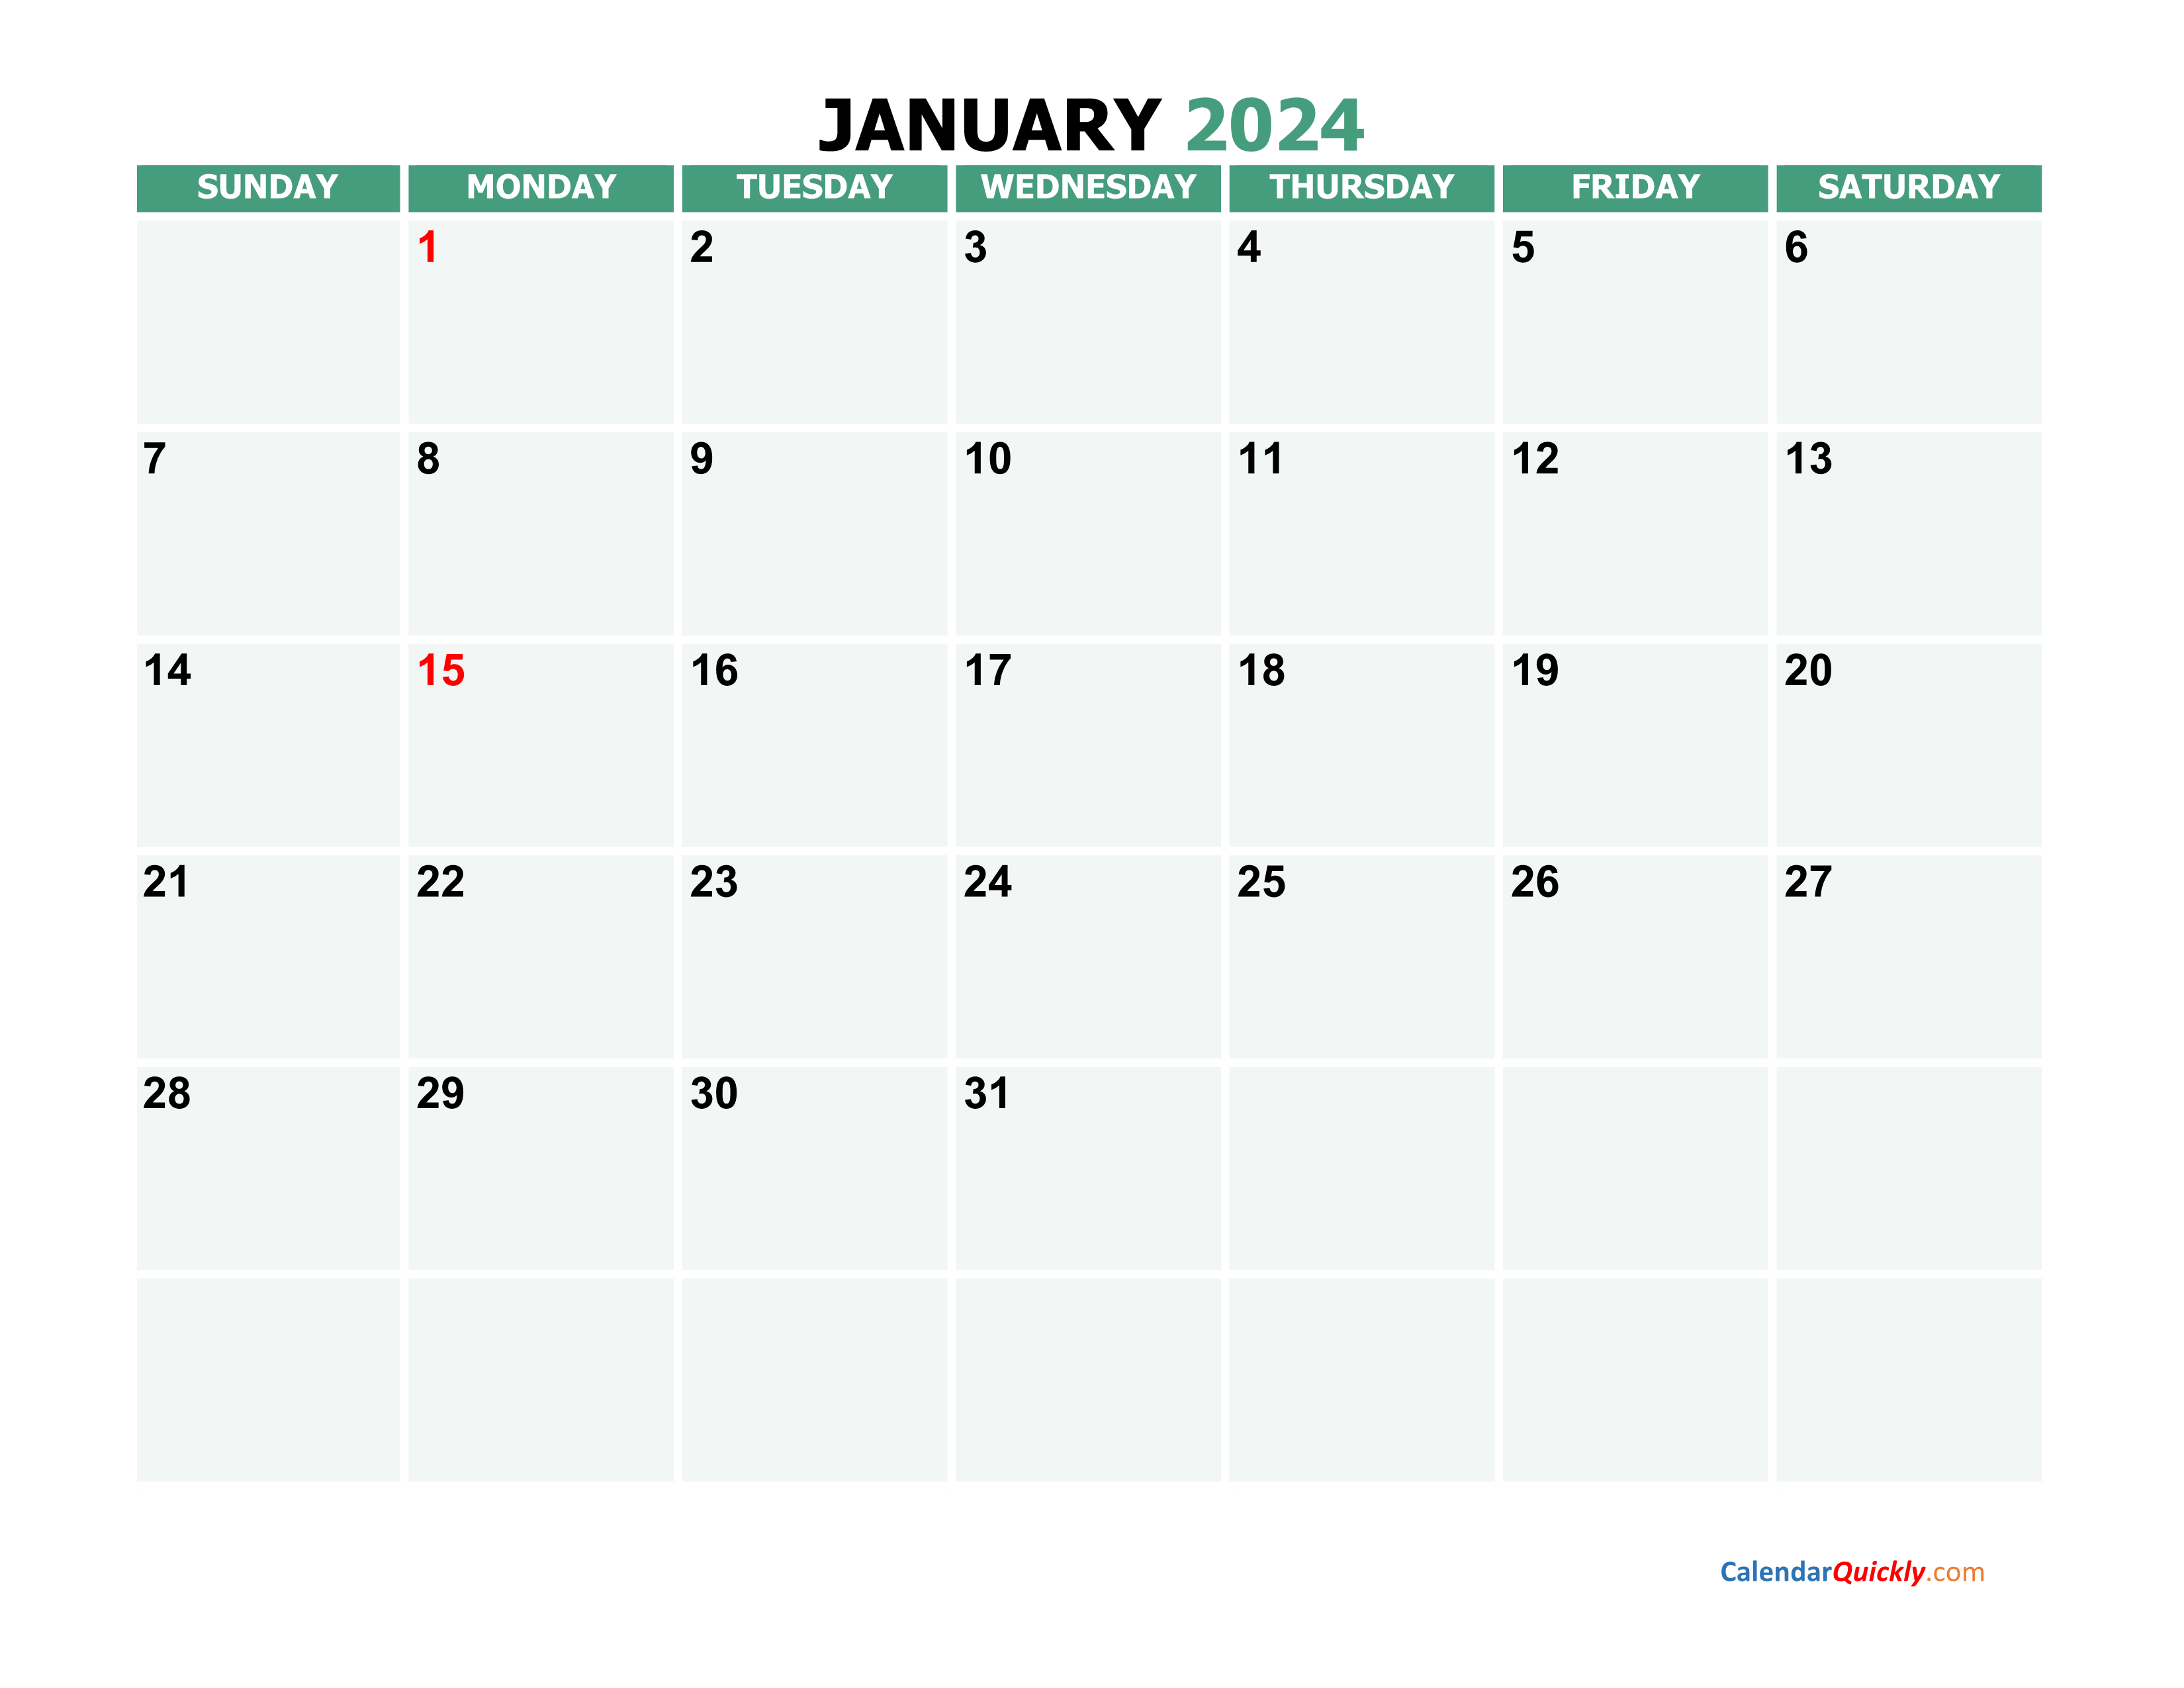 January Calendar 2024 Calendarpedia 2024 CALENDAR PRINTABLE